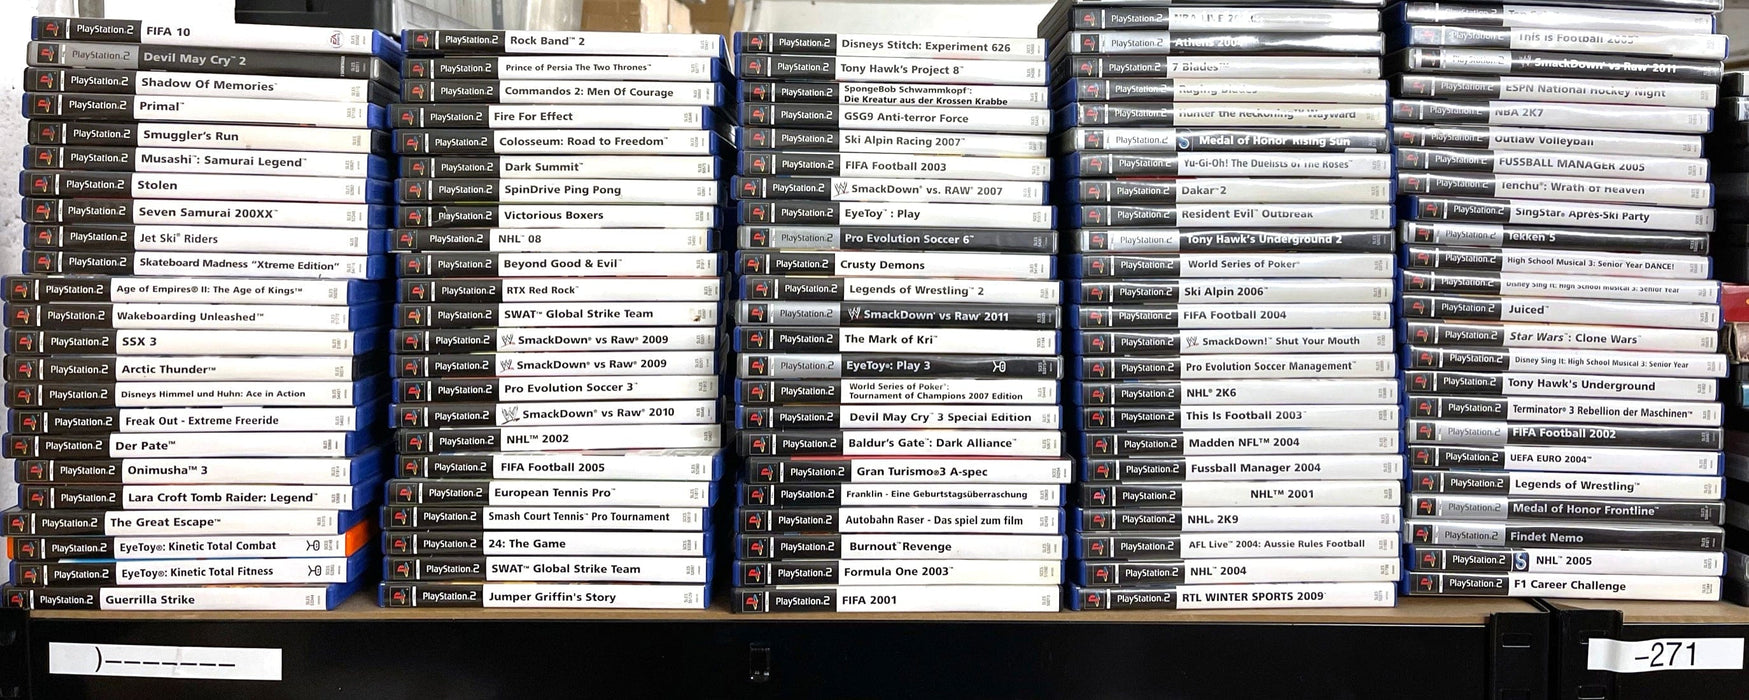 Glaciergames PlayStation 2 Game Medal of Honor: Rising Sun PlayStation 2 (Nr.467)